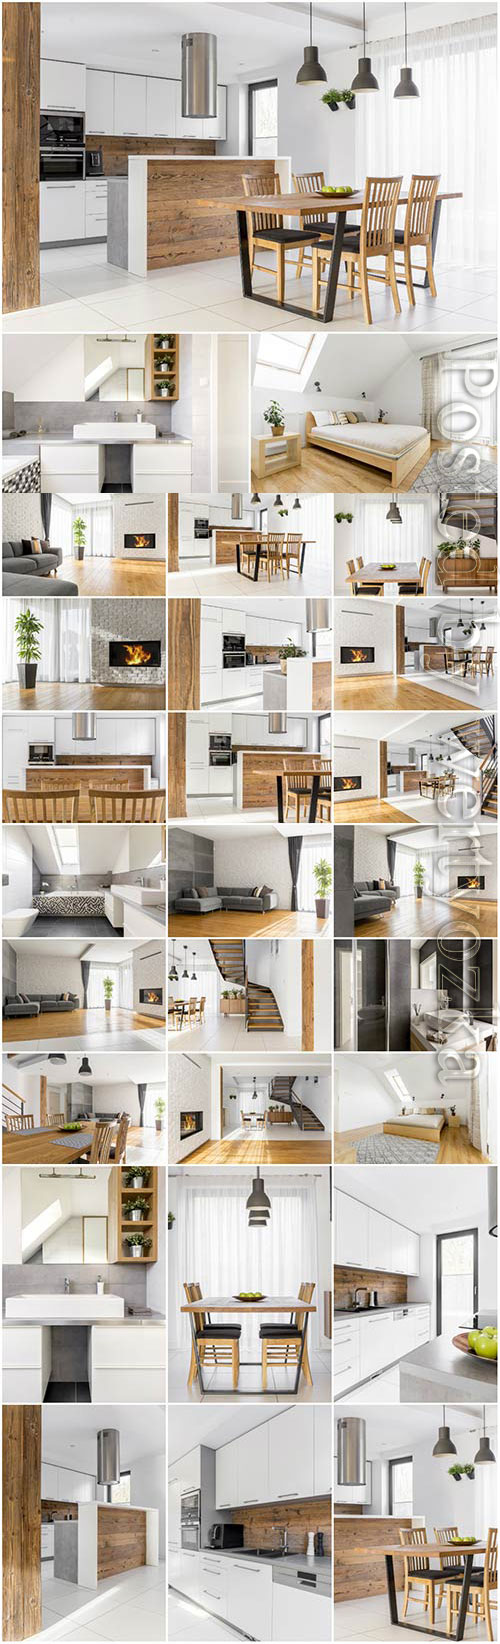 Kitchen and bedroom interior stock photo